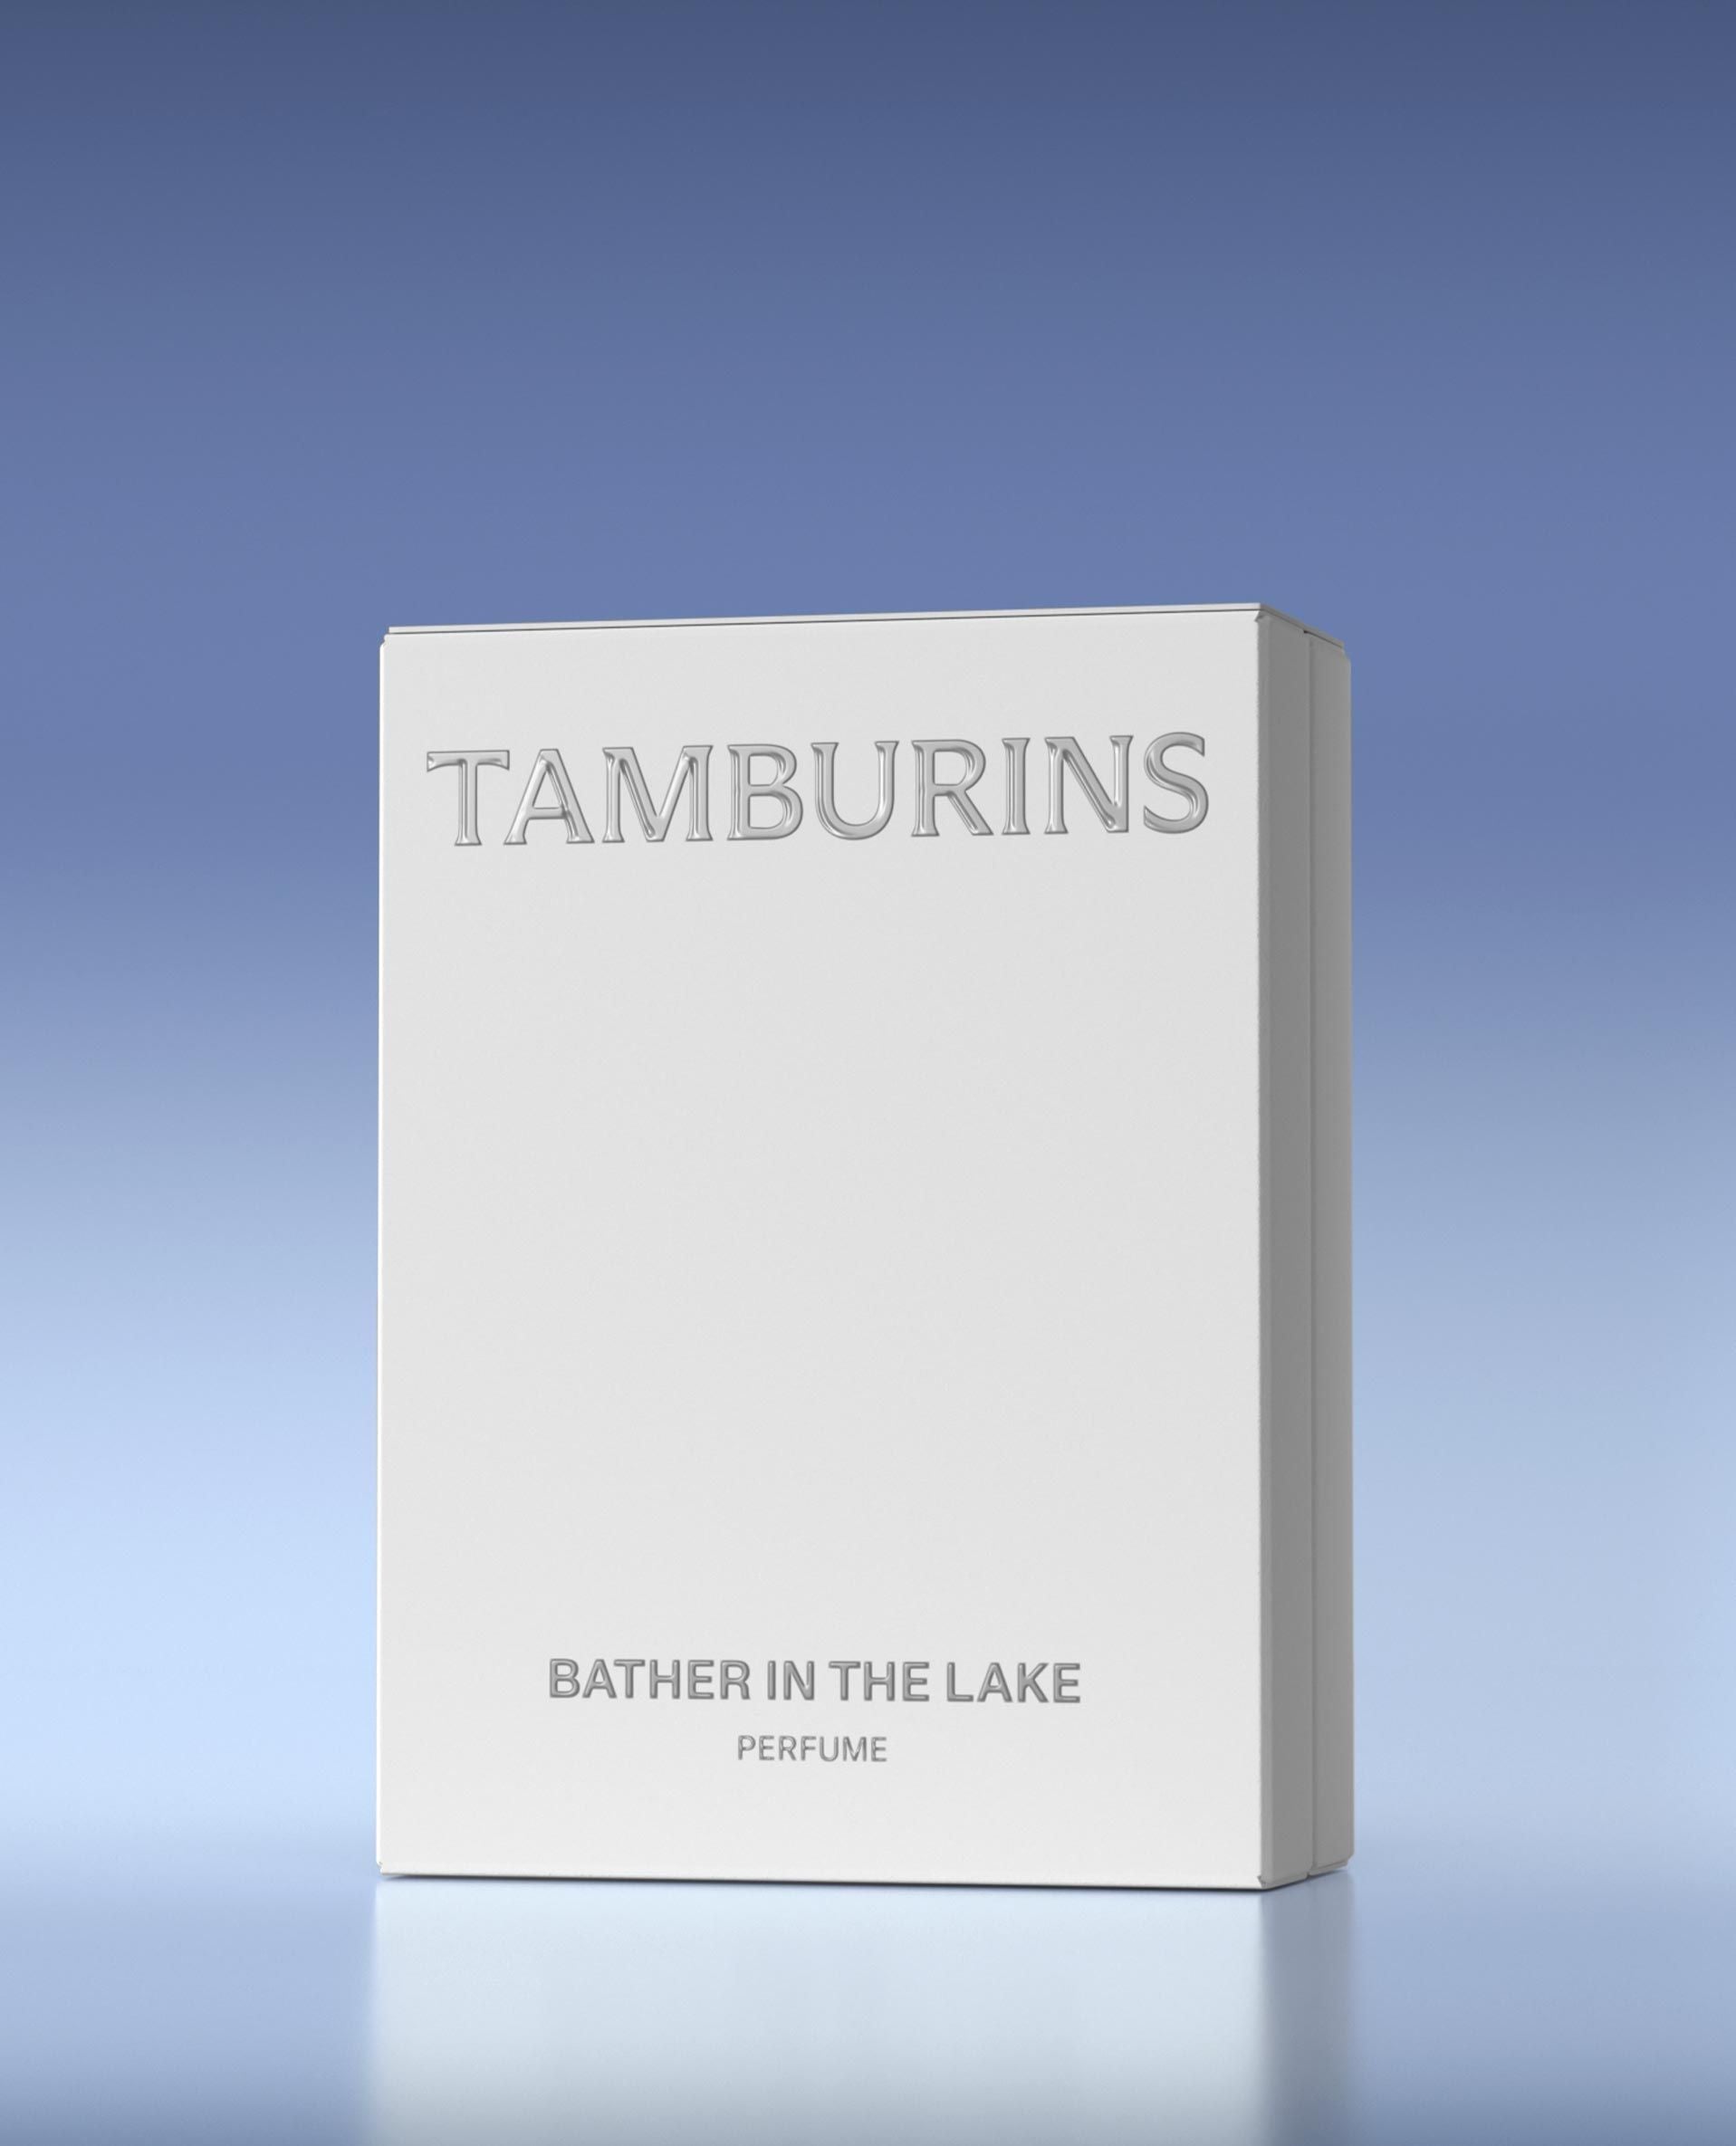 TAMBURINS Bañera de perfume en el lago 11 ml / 50ml